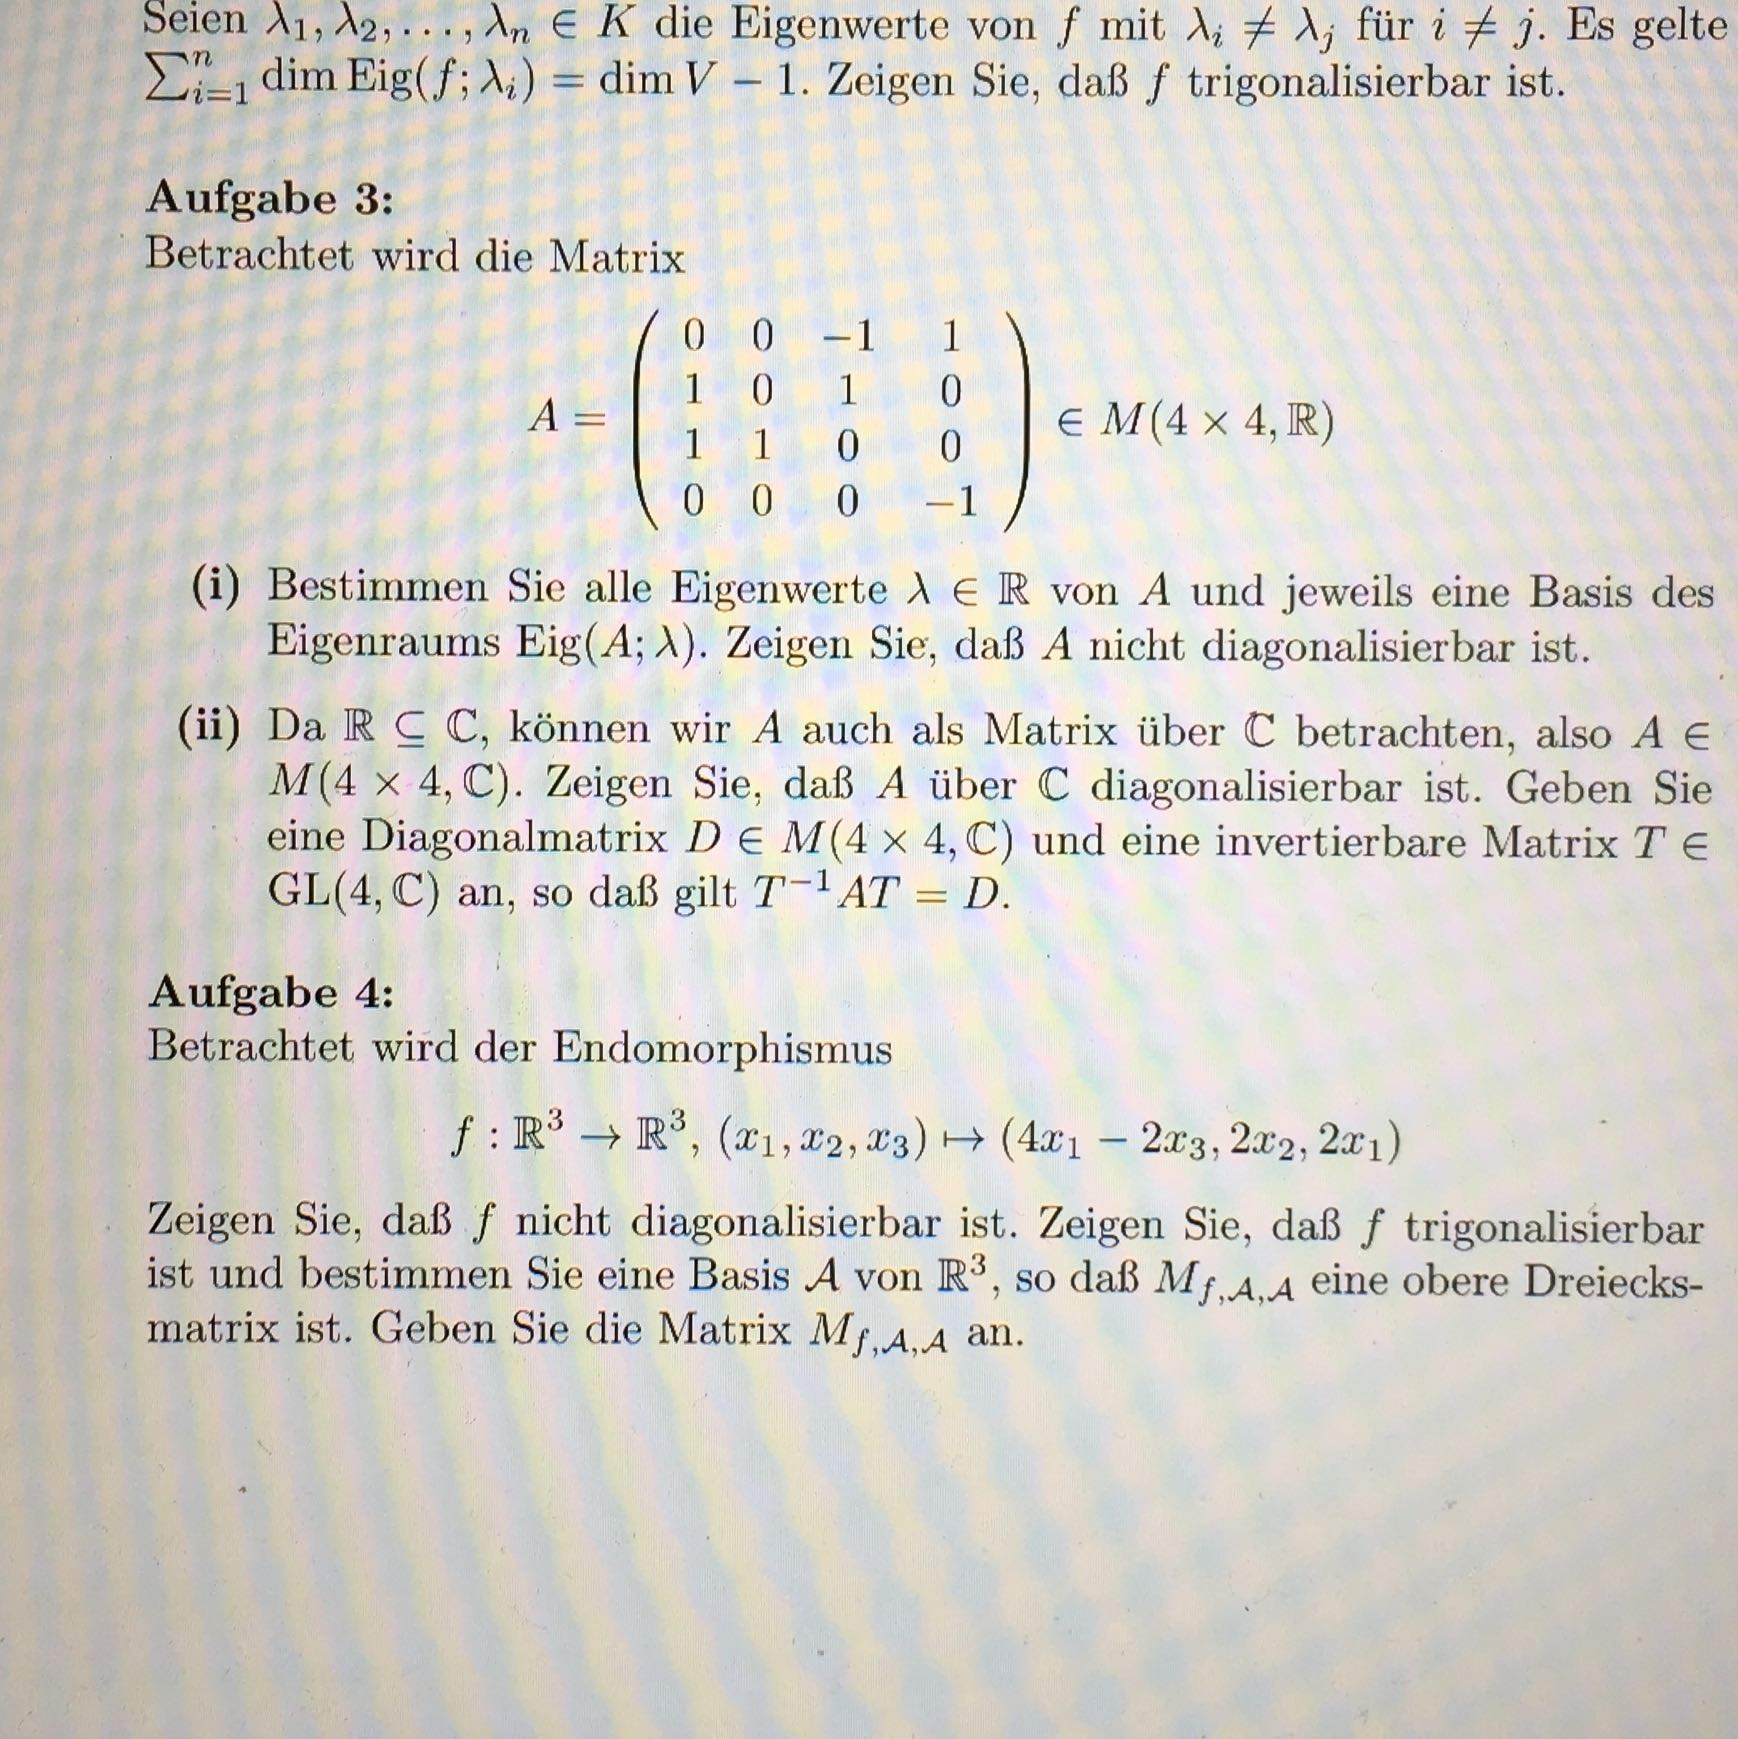 Diagonalmatrix und inverse Matrix bestimmen? (Schule, Mathematik